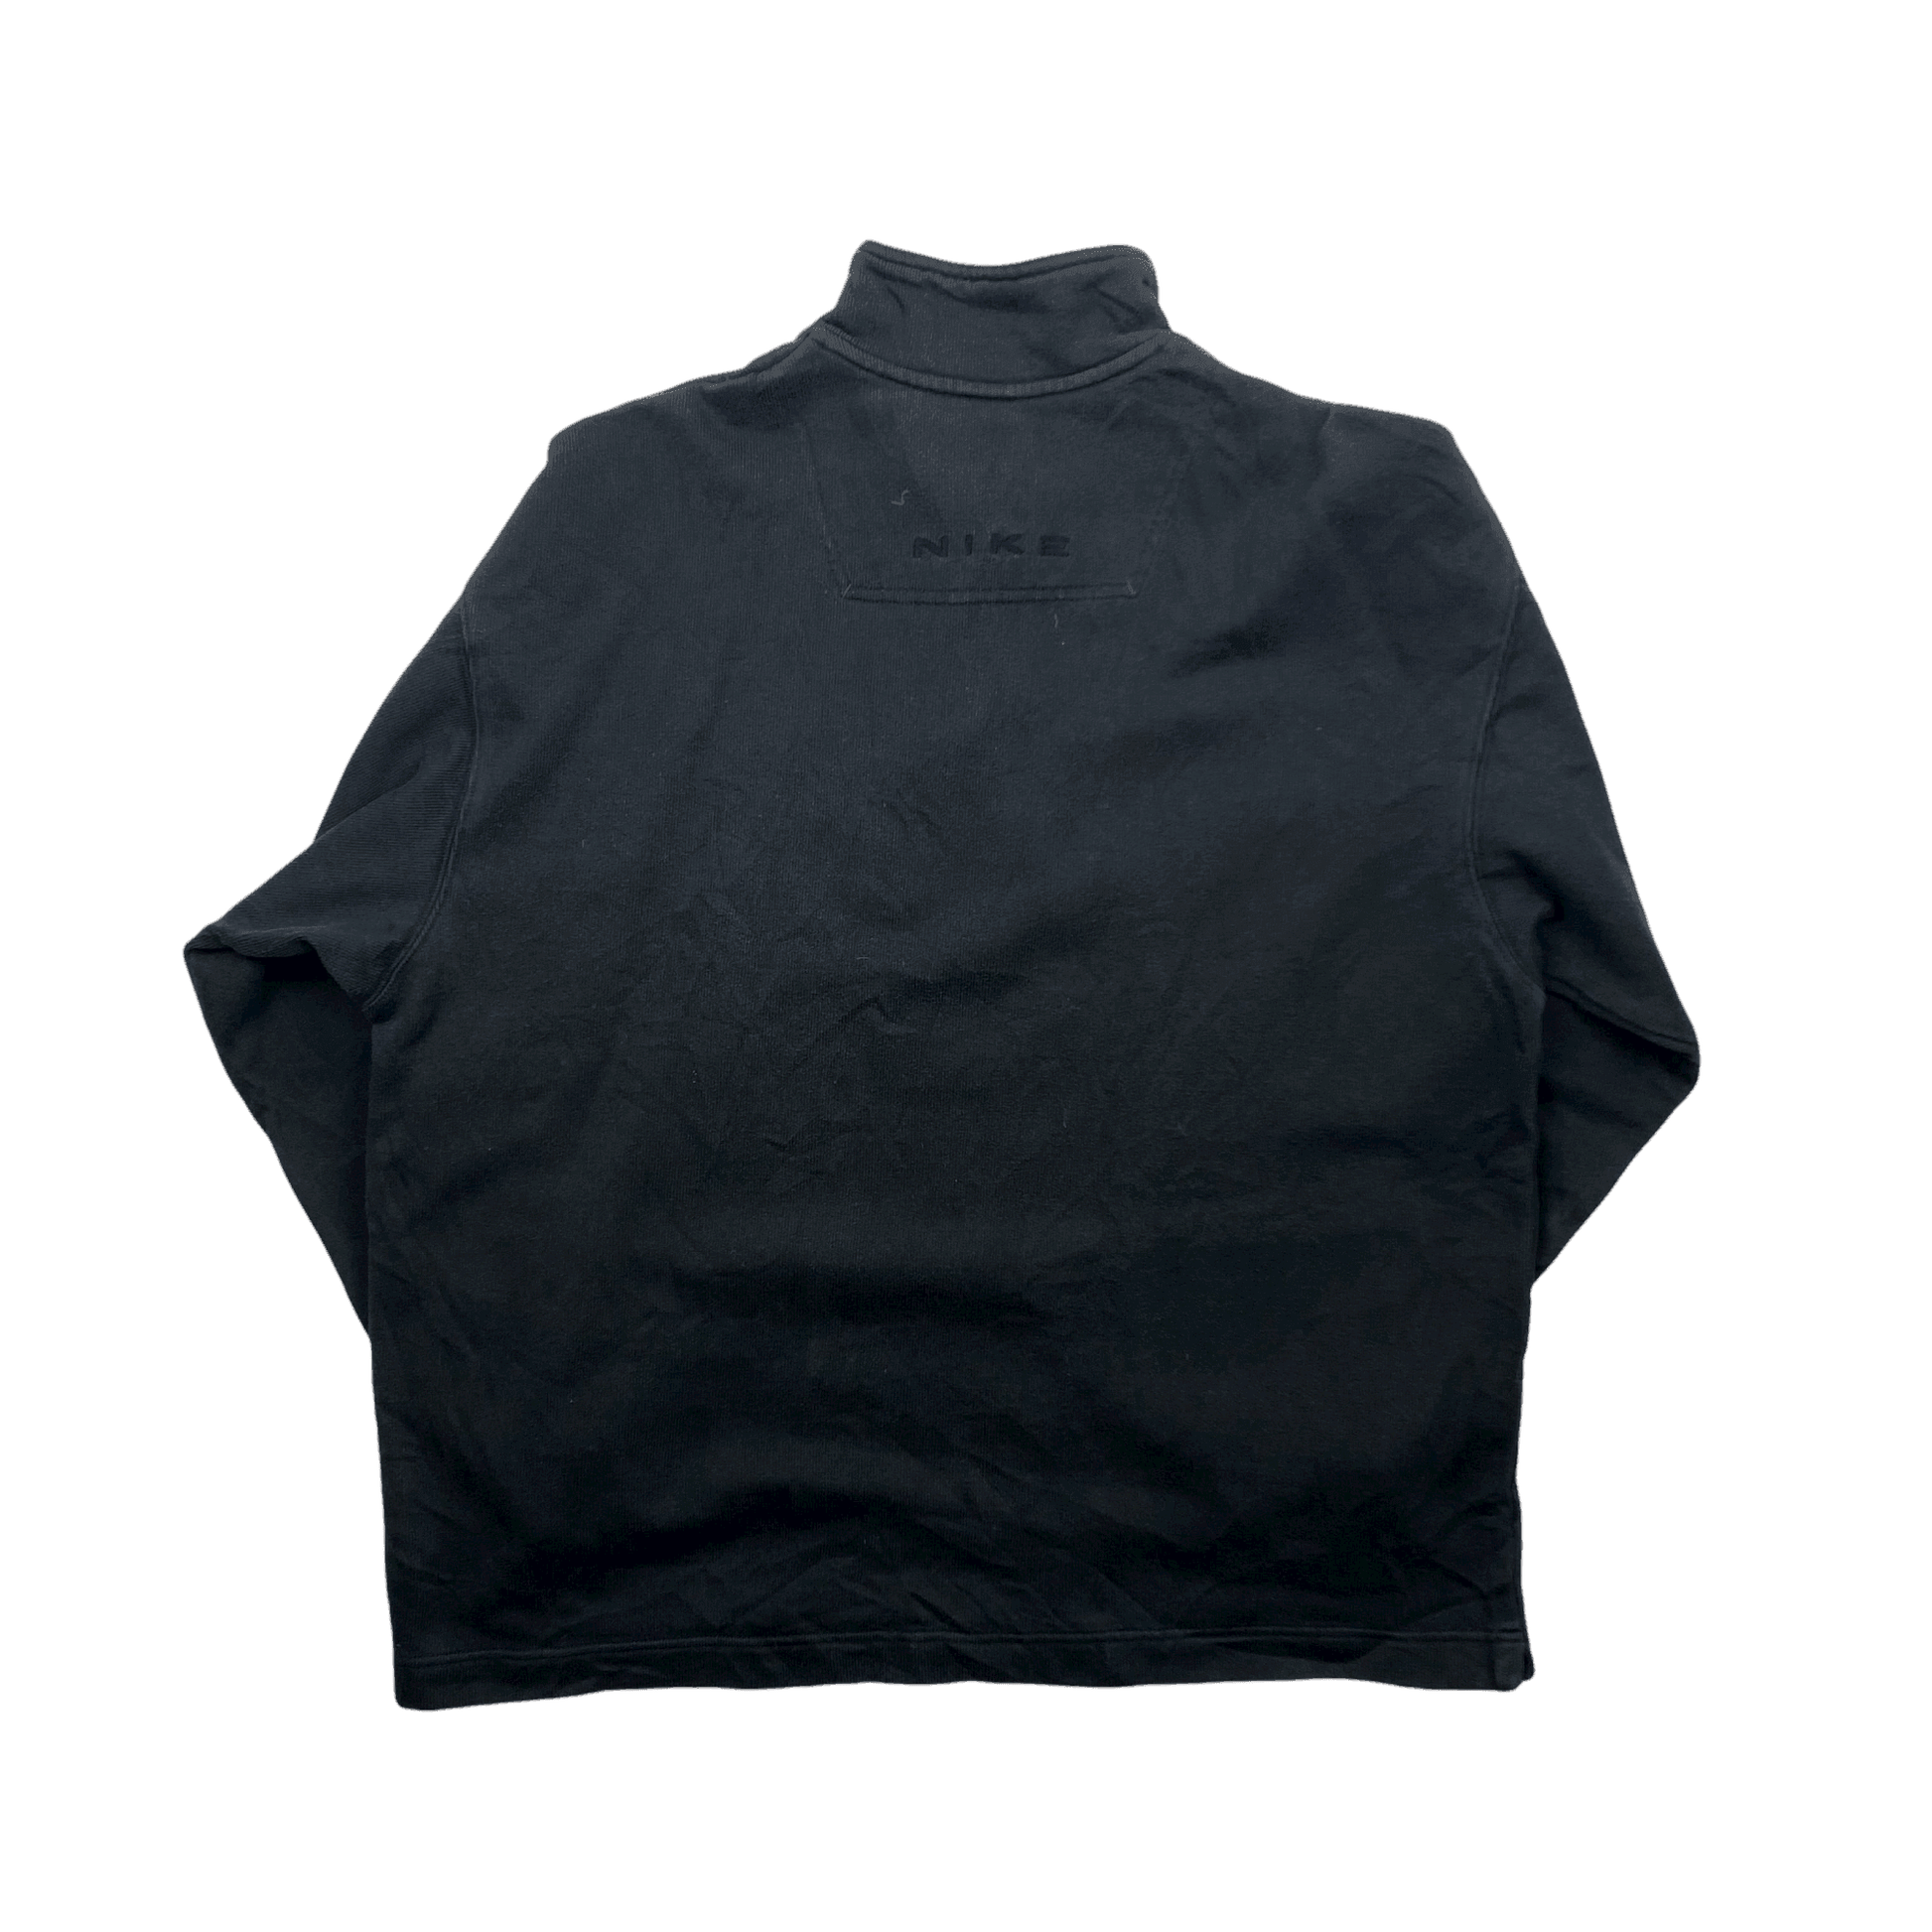 Vintage 90s Black Nike Quarter Zip Sweatshirt - Extra Large - The Streetwear Studio